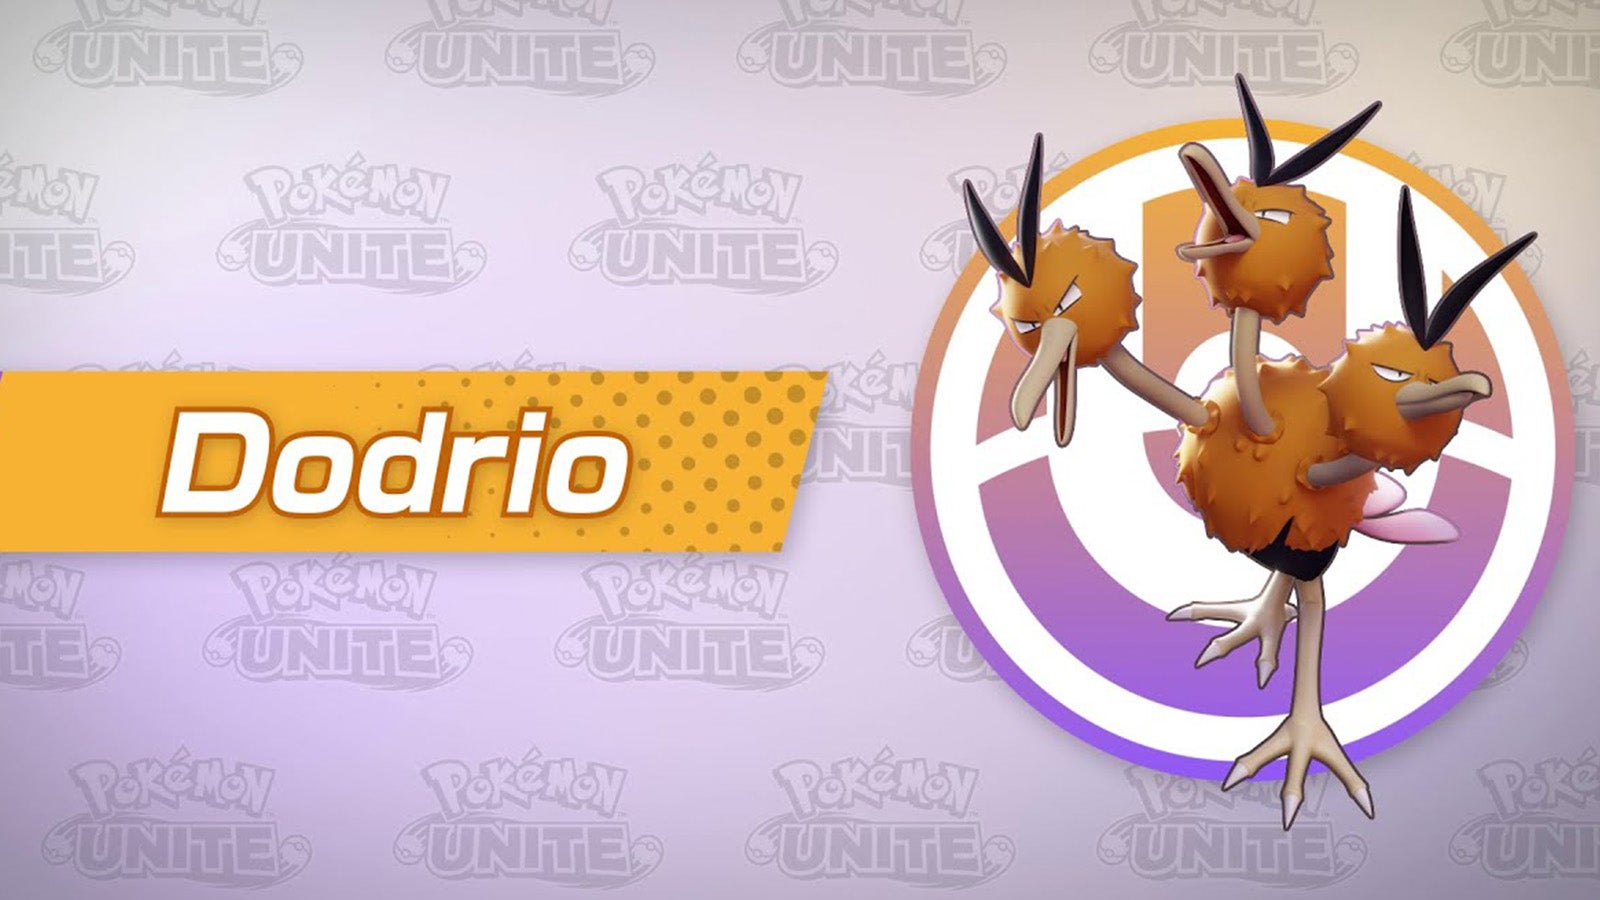 Image for Pokémon Unite Dodrio build, best items and moveset